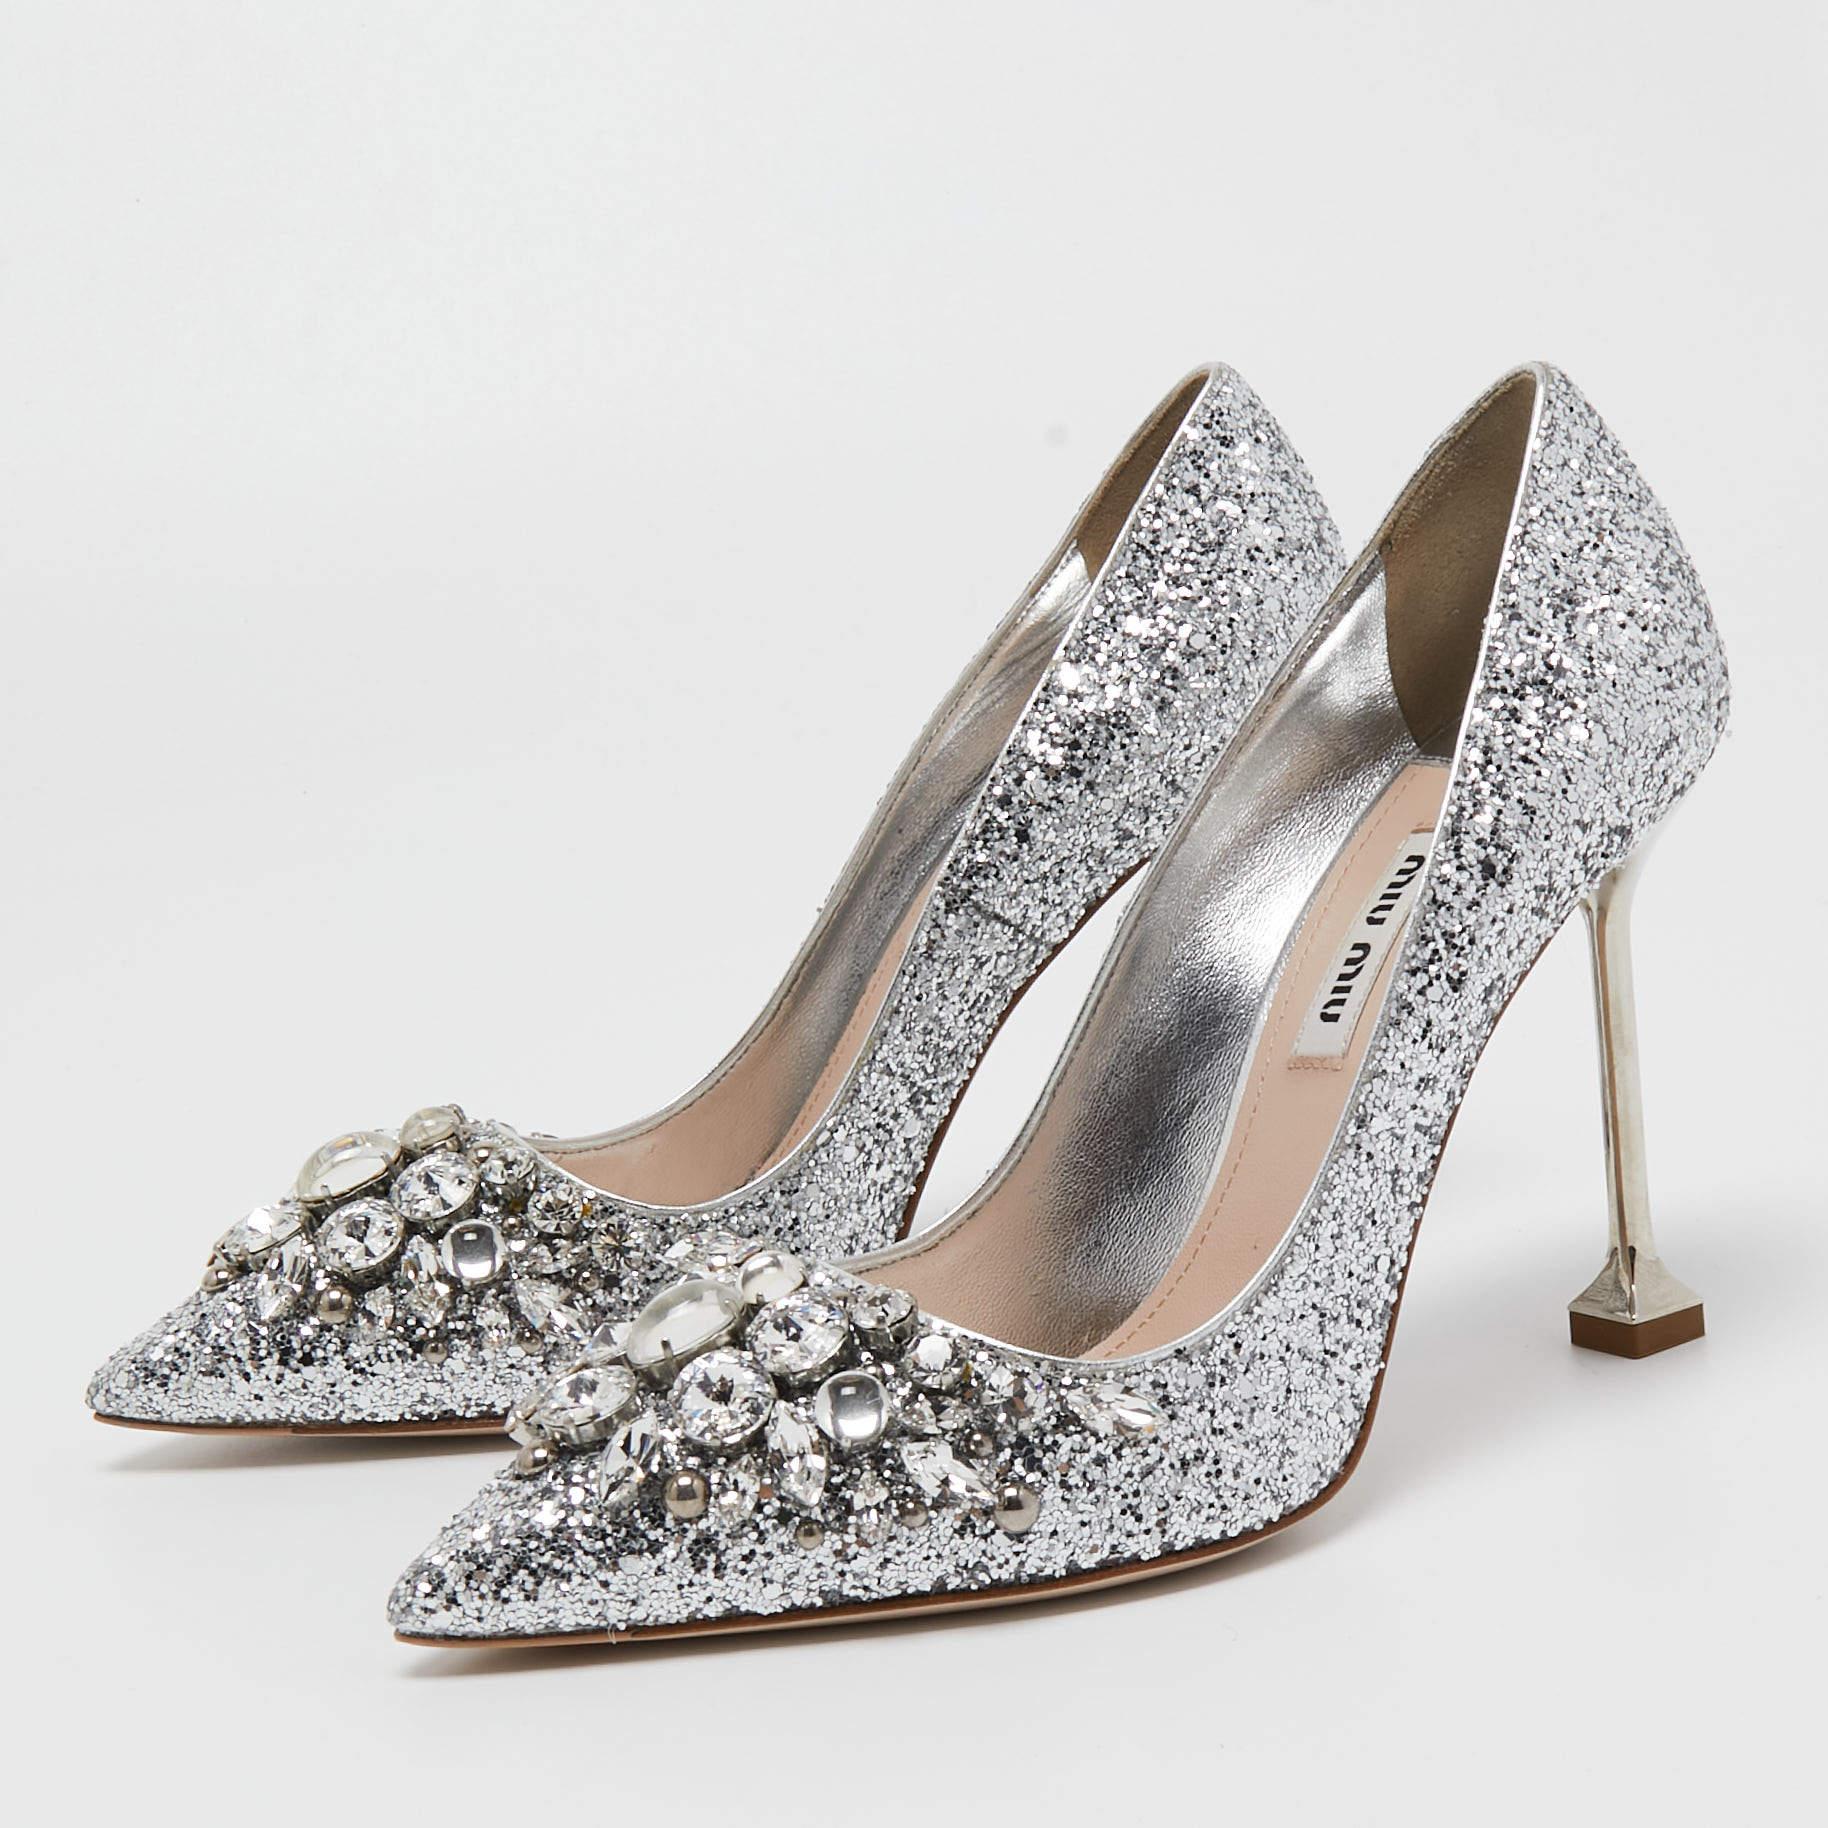 Miu Miu Silver Glitter Crystal Embellished Pointed Toe Pumps Size 35.5 2